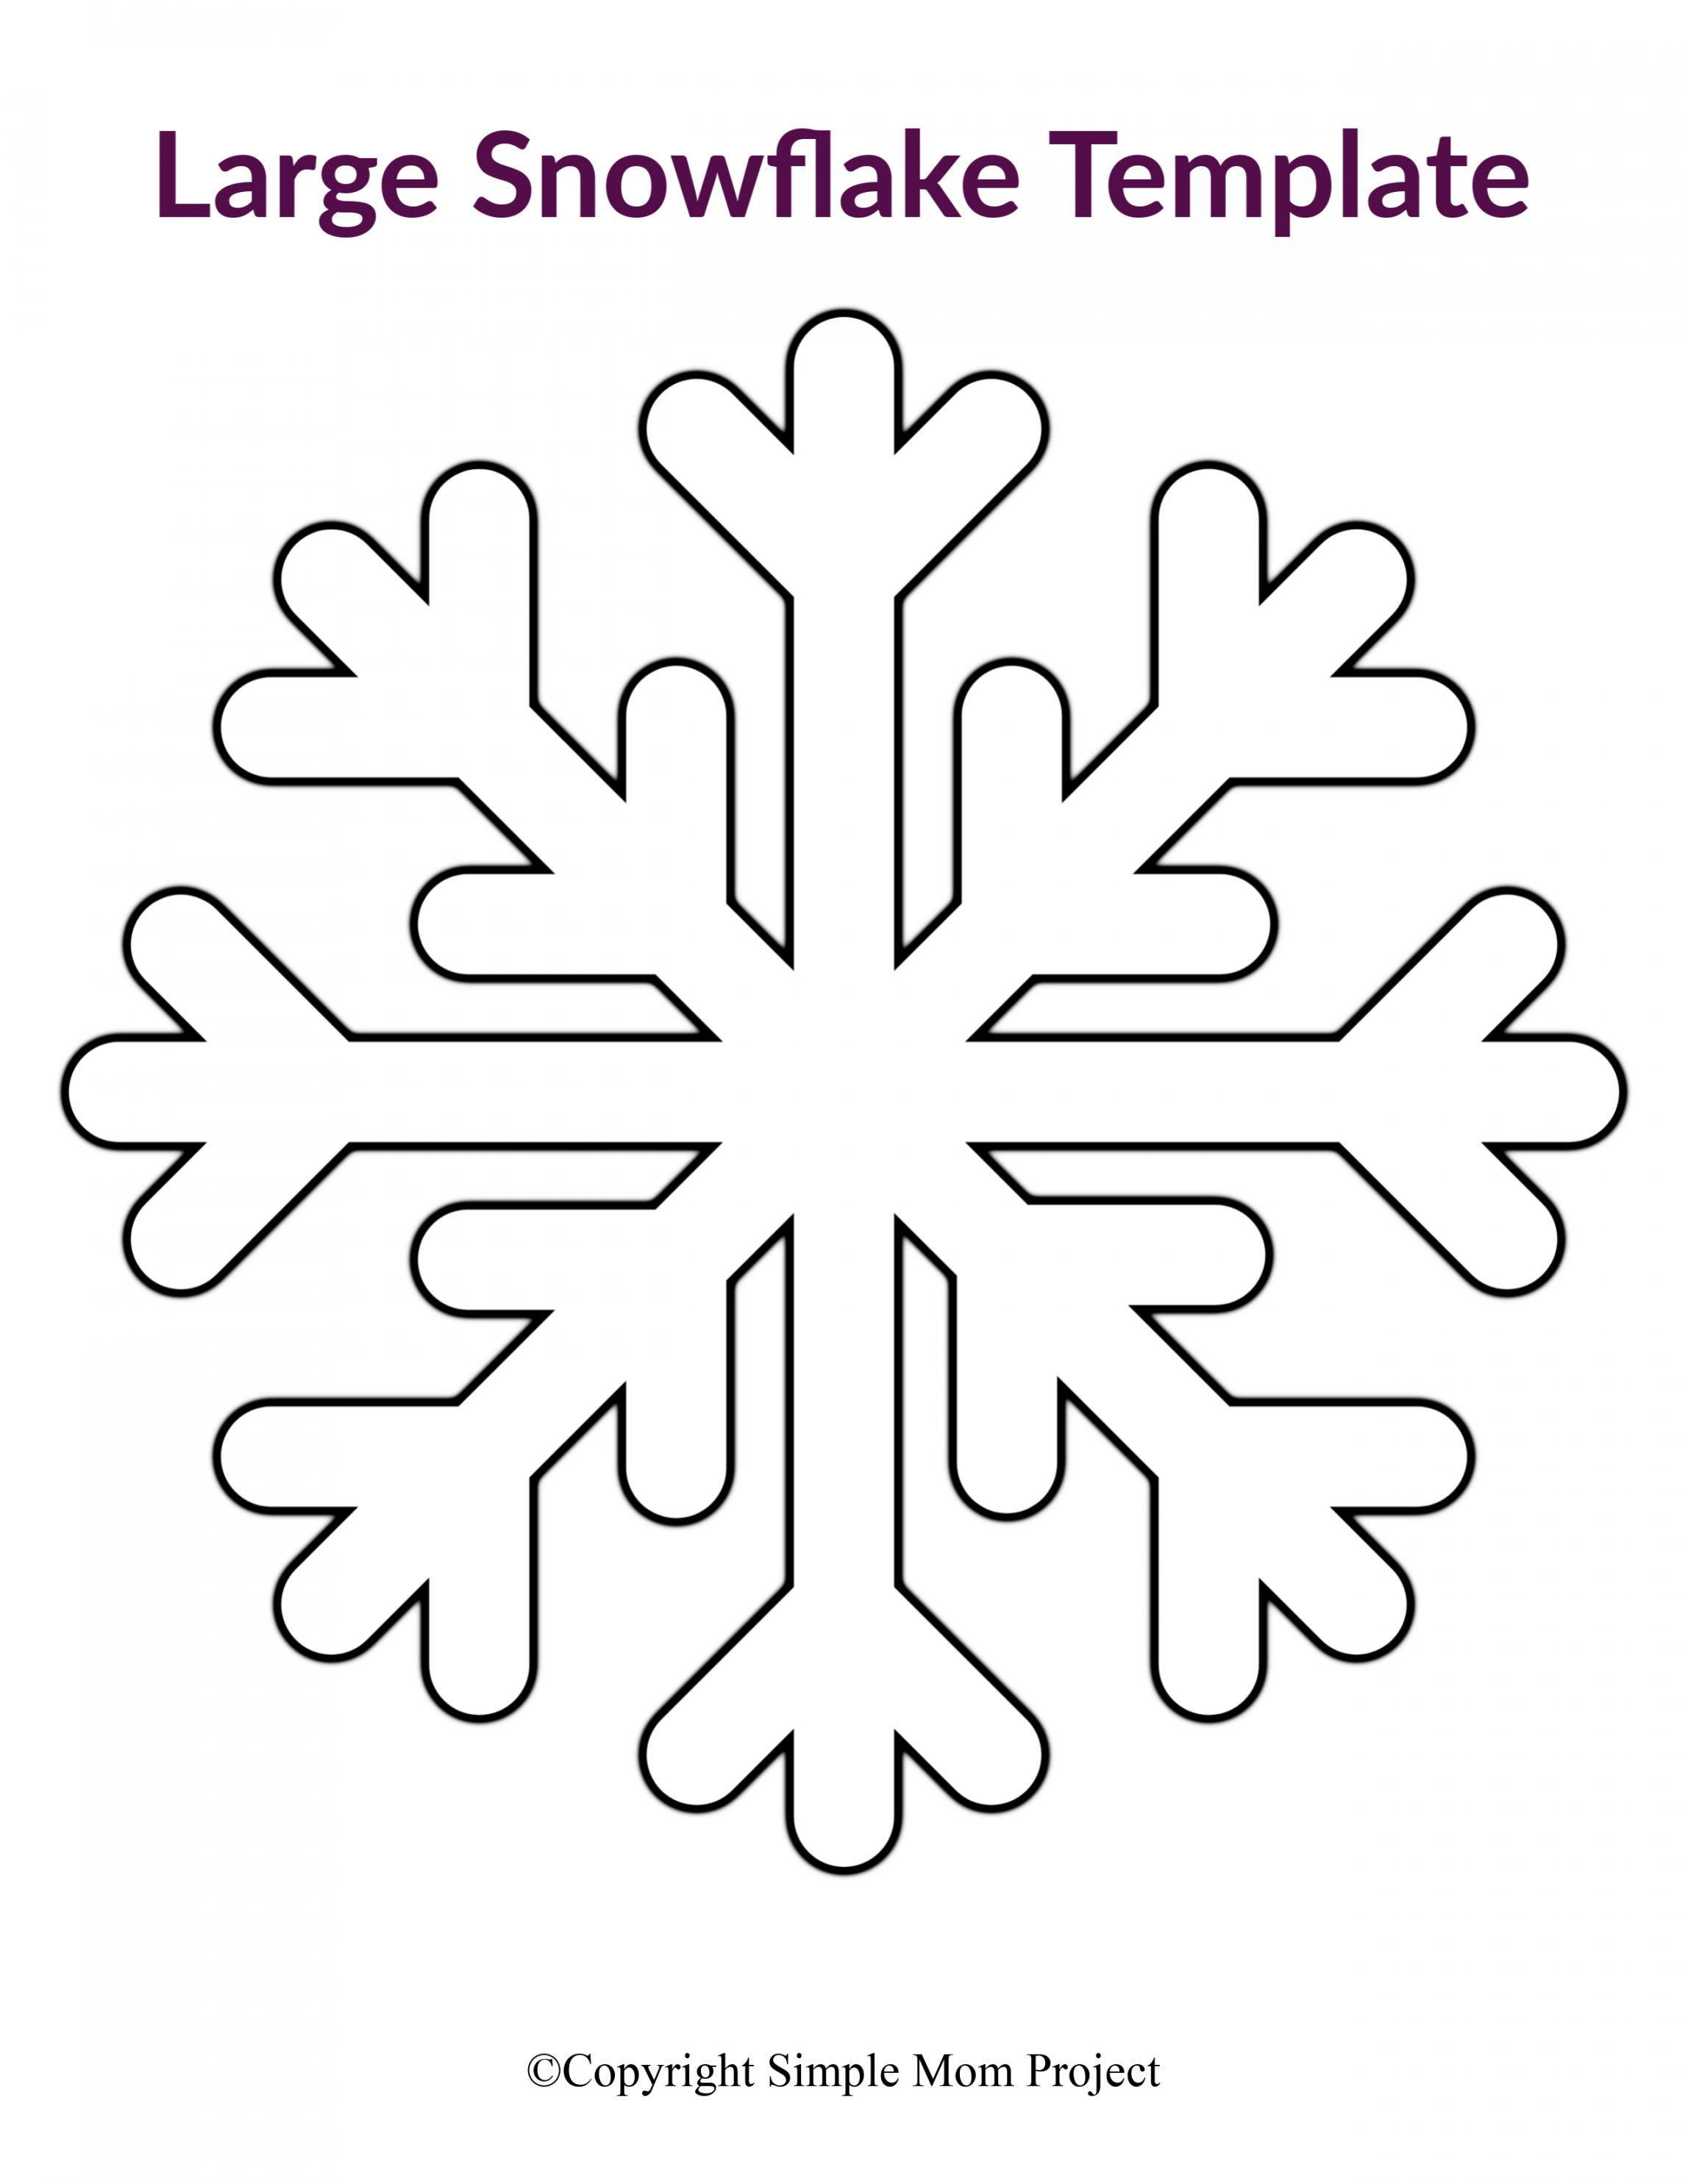 Free Printable Large Snowflake Templates - Simple Mom Project - FREE Printables - Snowflake Cutouts Printable